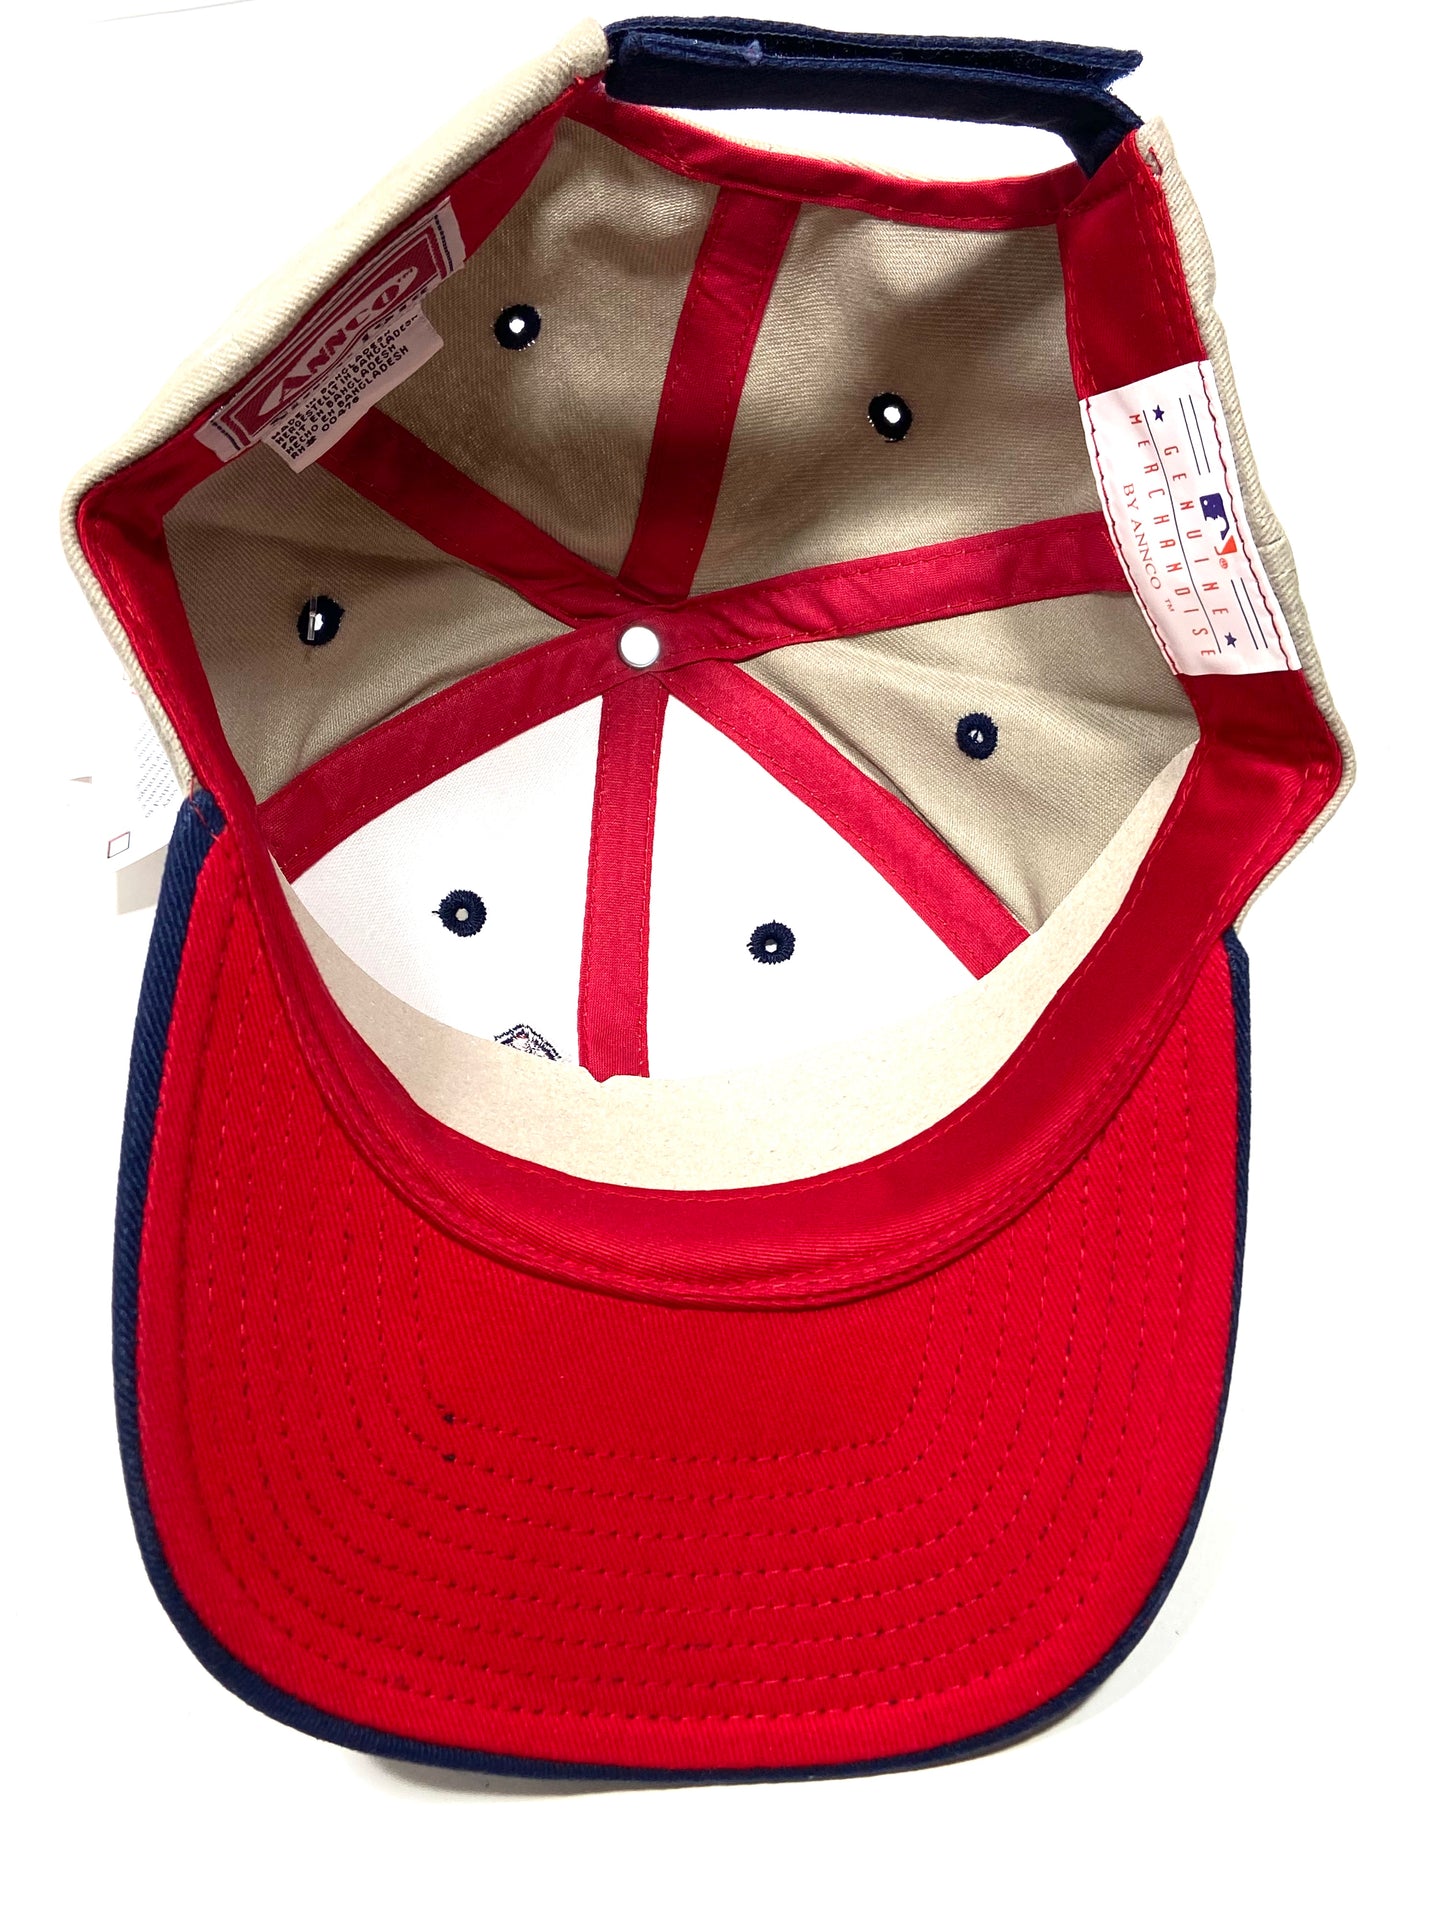 Cleveland Indians Vintage MLB Khaki Logo Hat By Annco